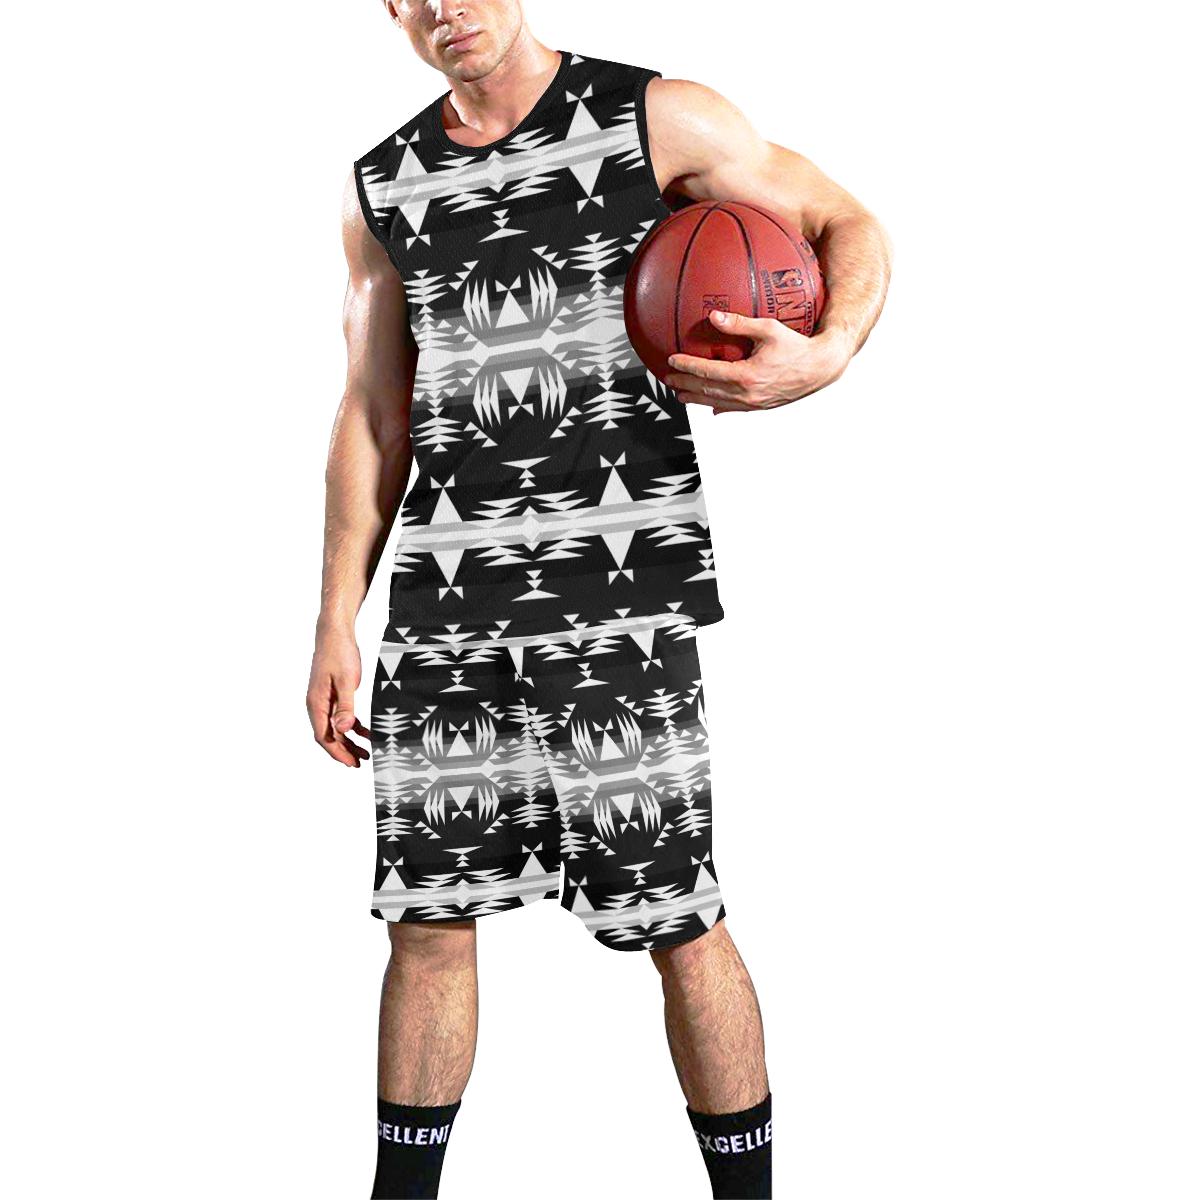 Between the Mountains Black and White All Over Print Basketball Uniform Basketball Uniform e-joyer 